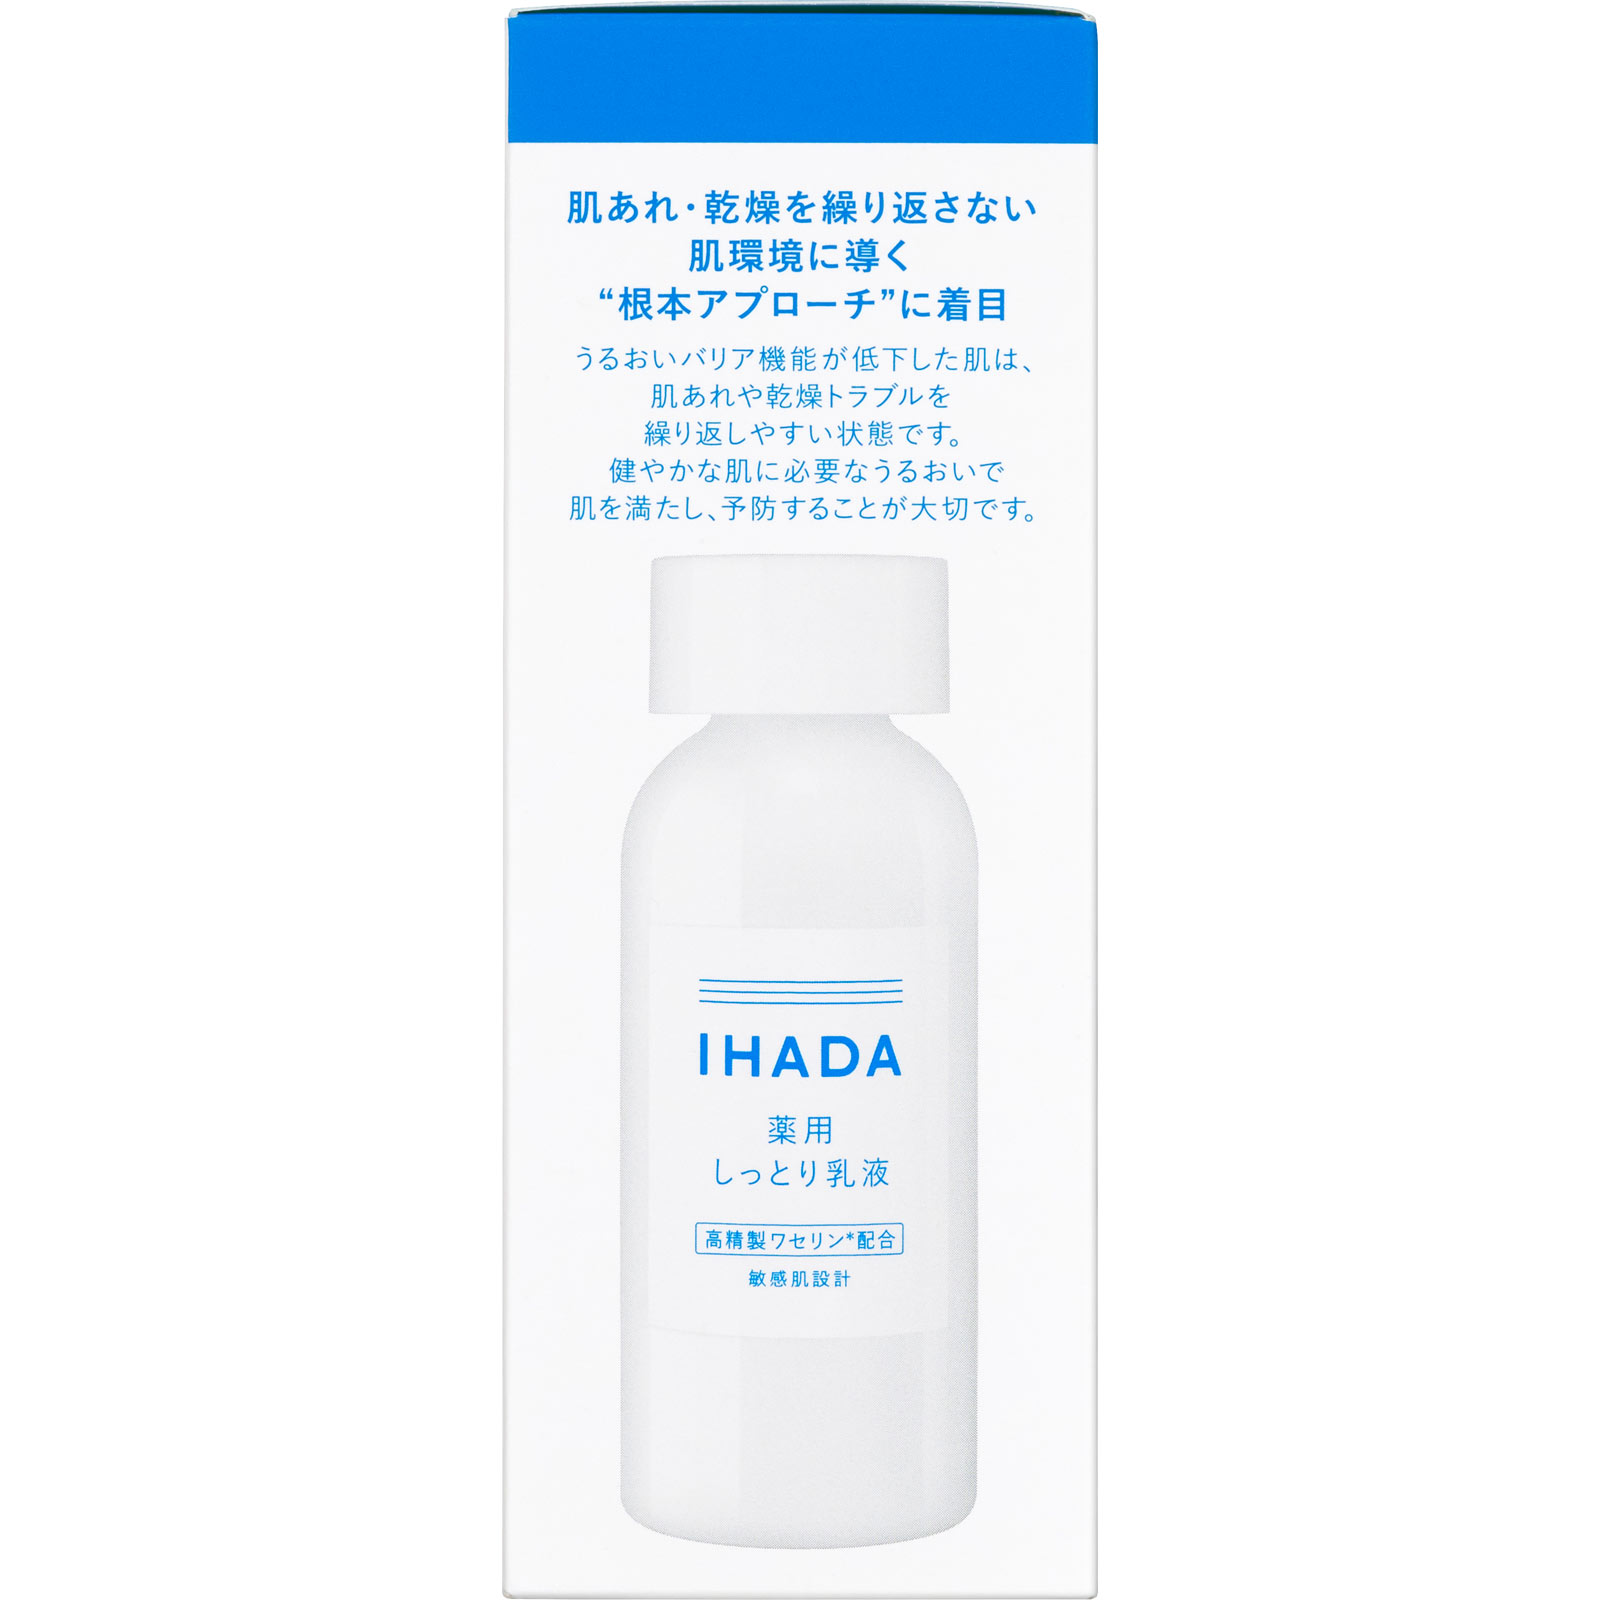 IHADA 薬用しっとり乳液 135ml - 乳液・ミルク